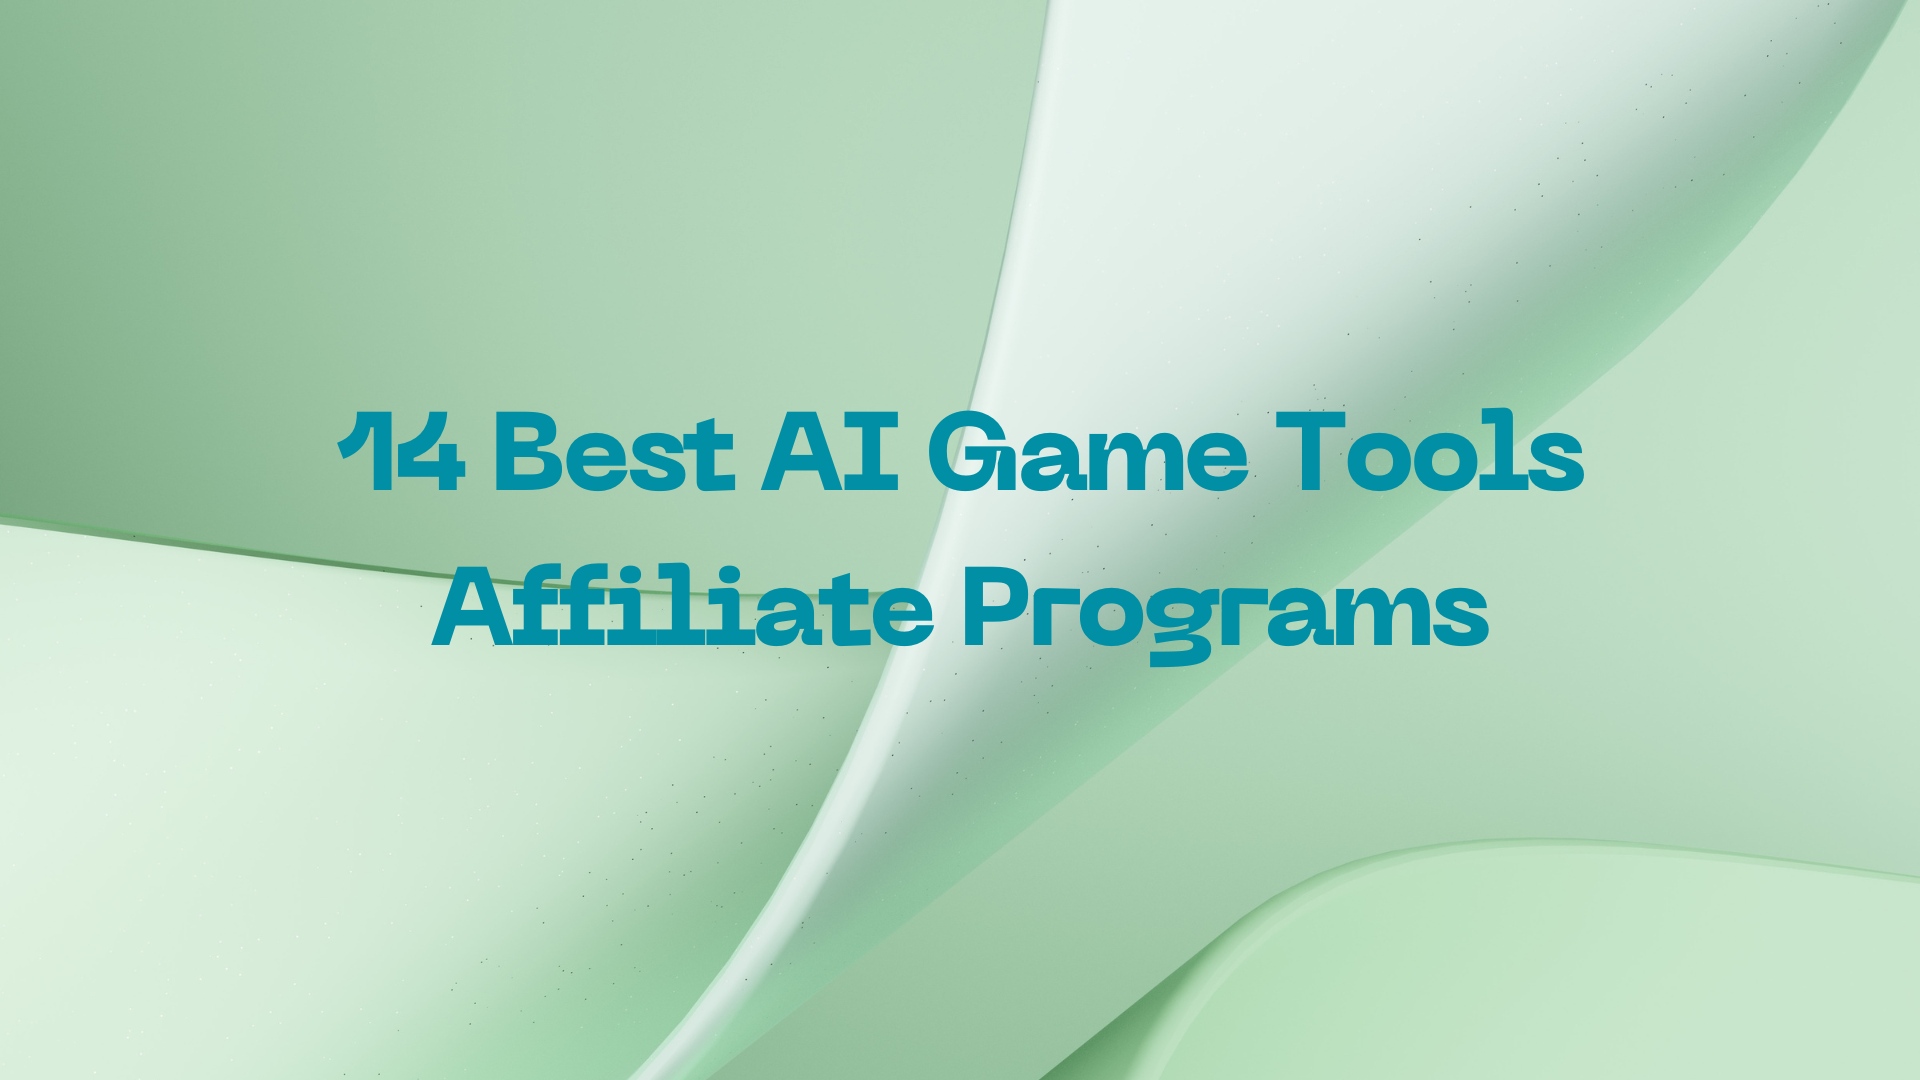 14 Best AI Game Tools Affiliate Programs